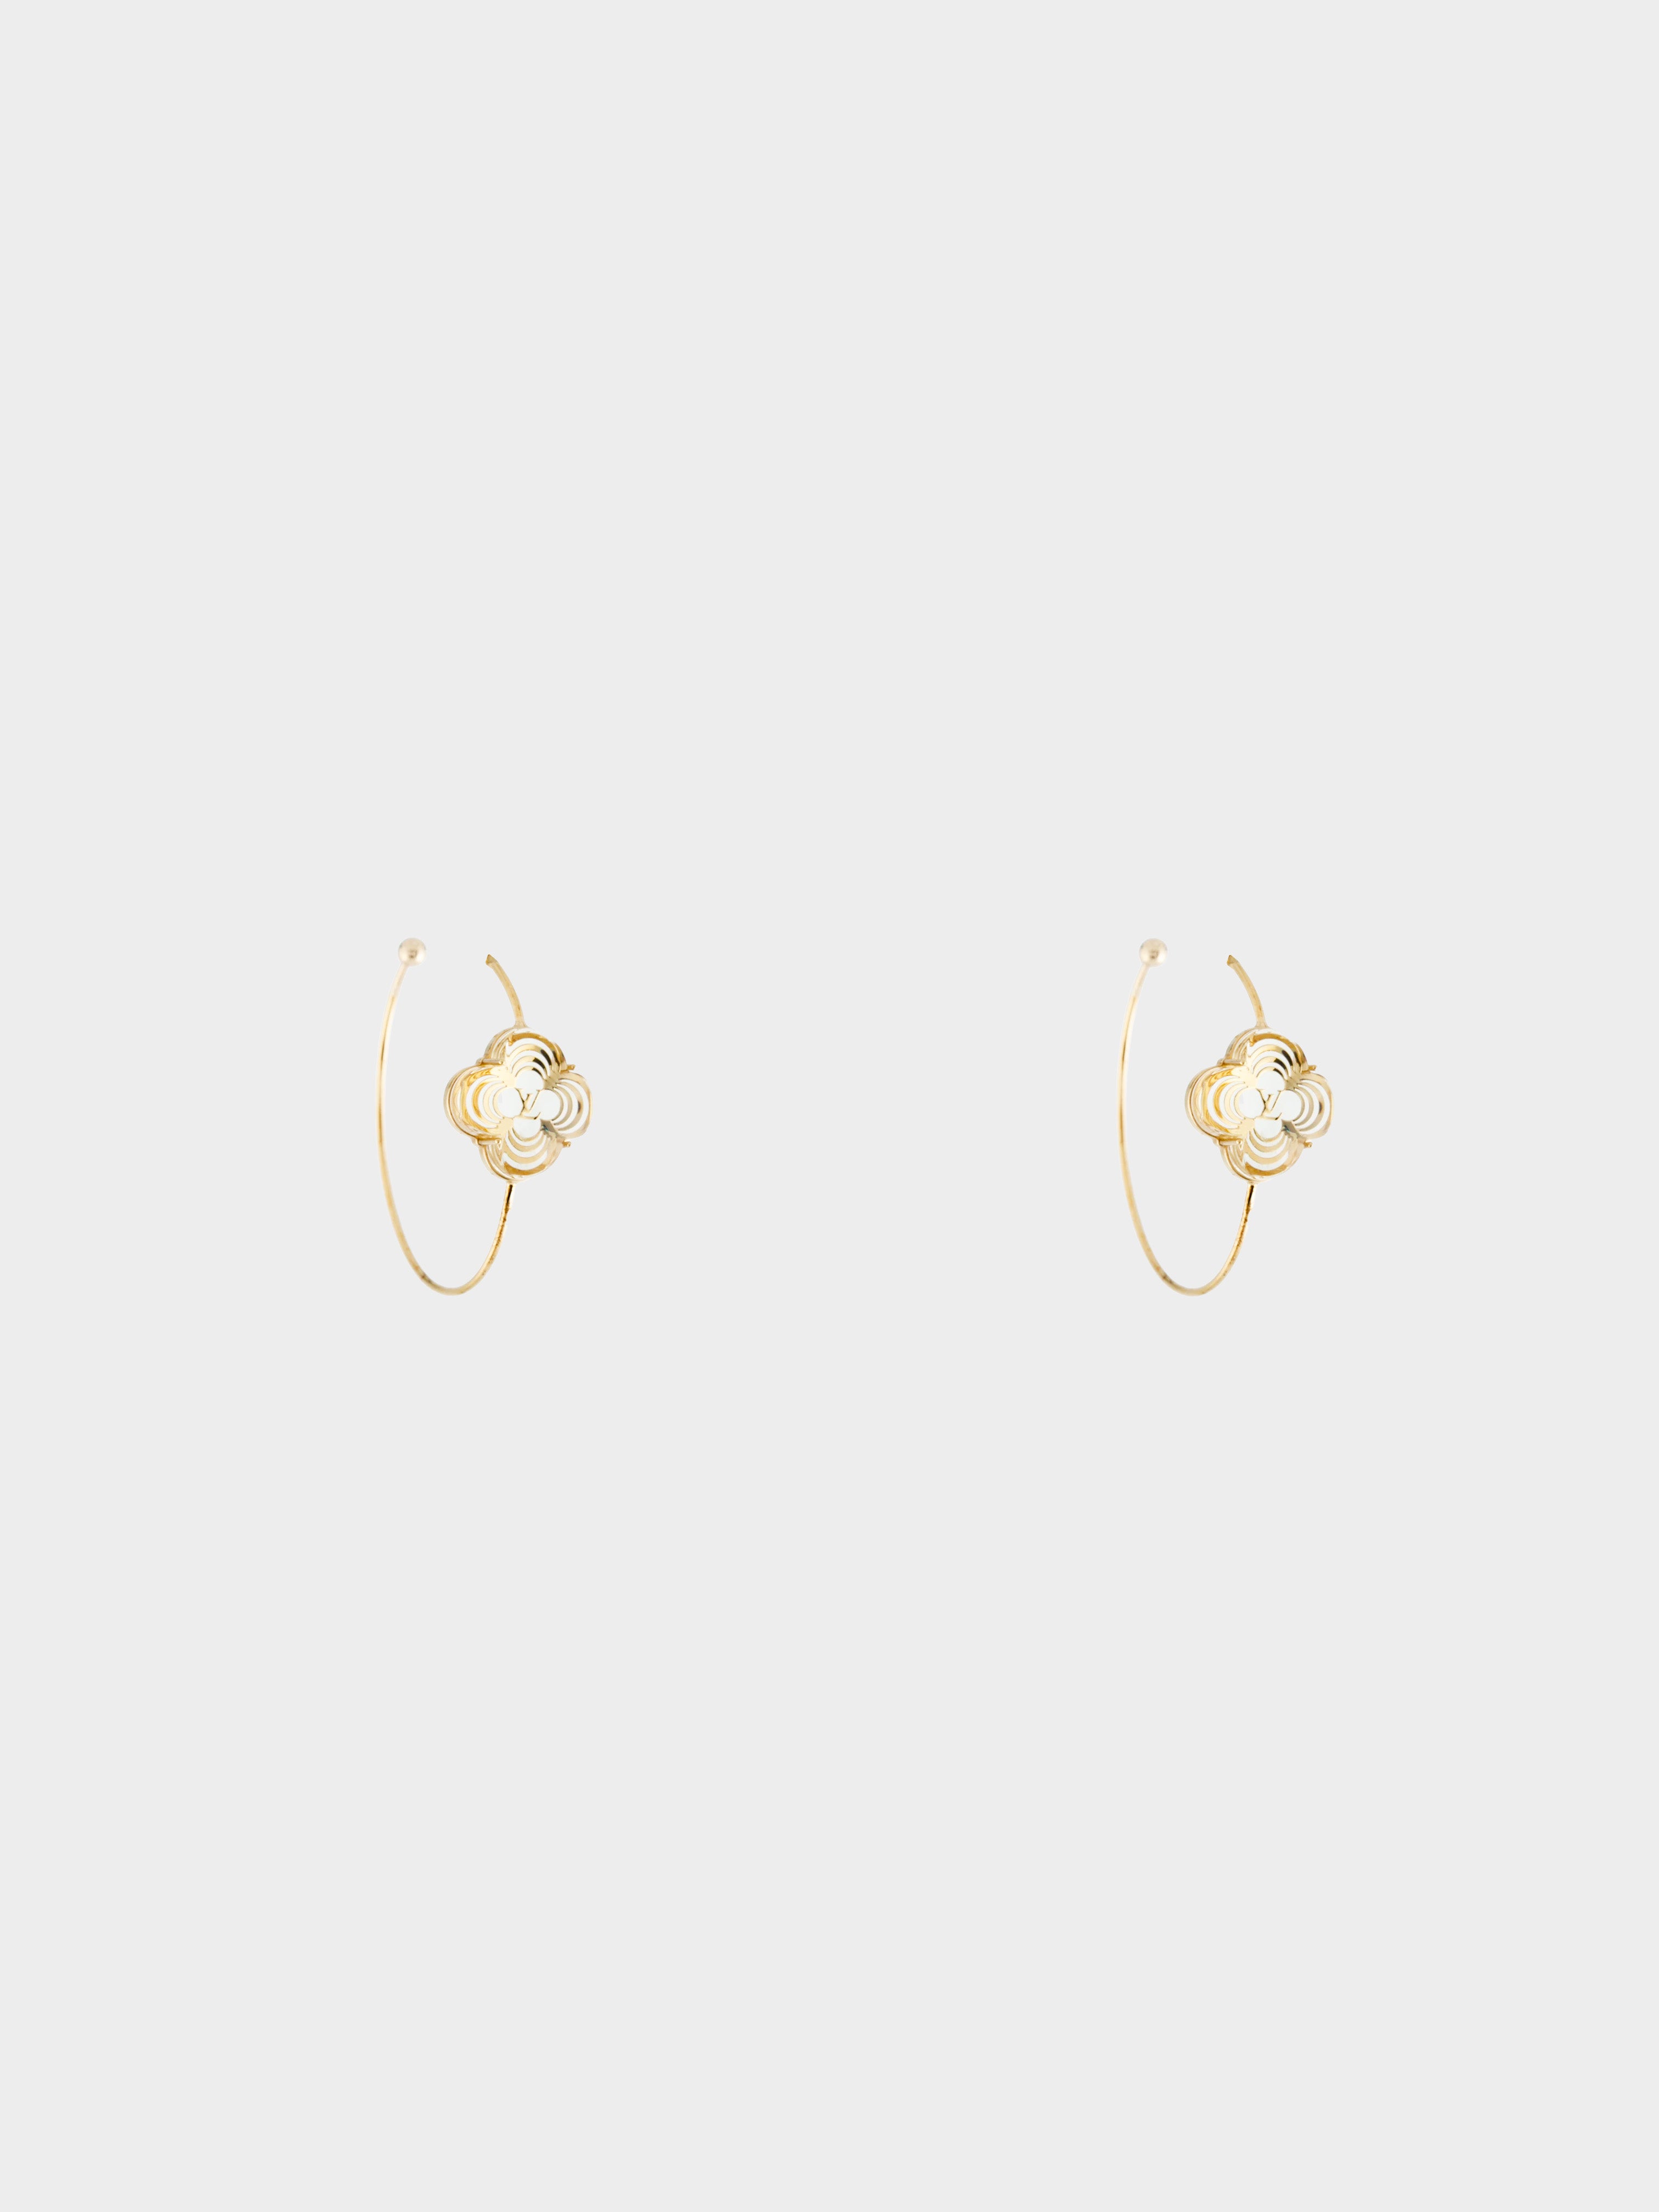 lv small earrings